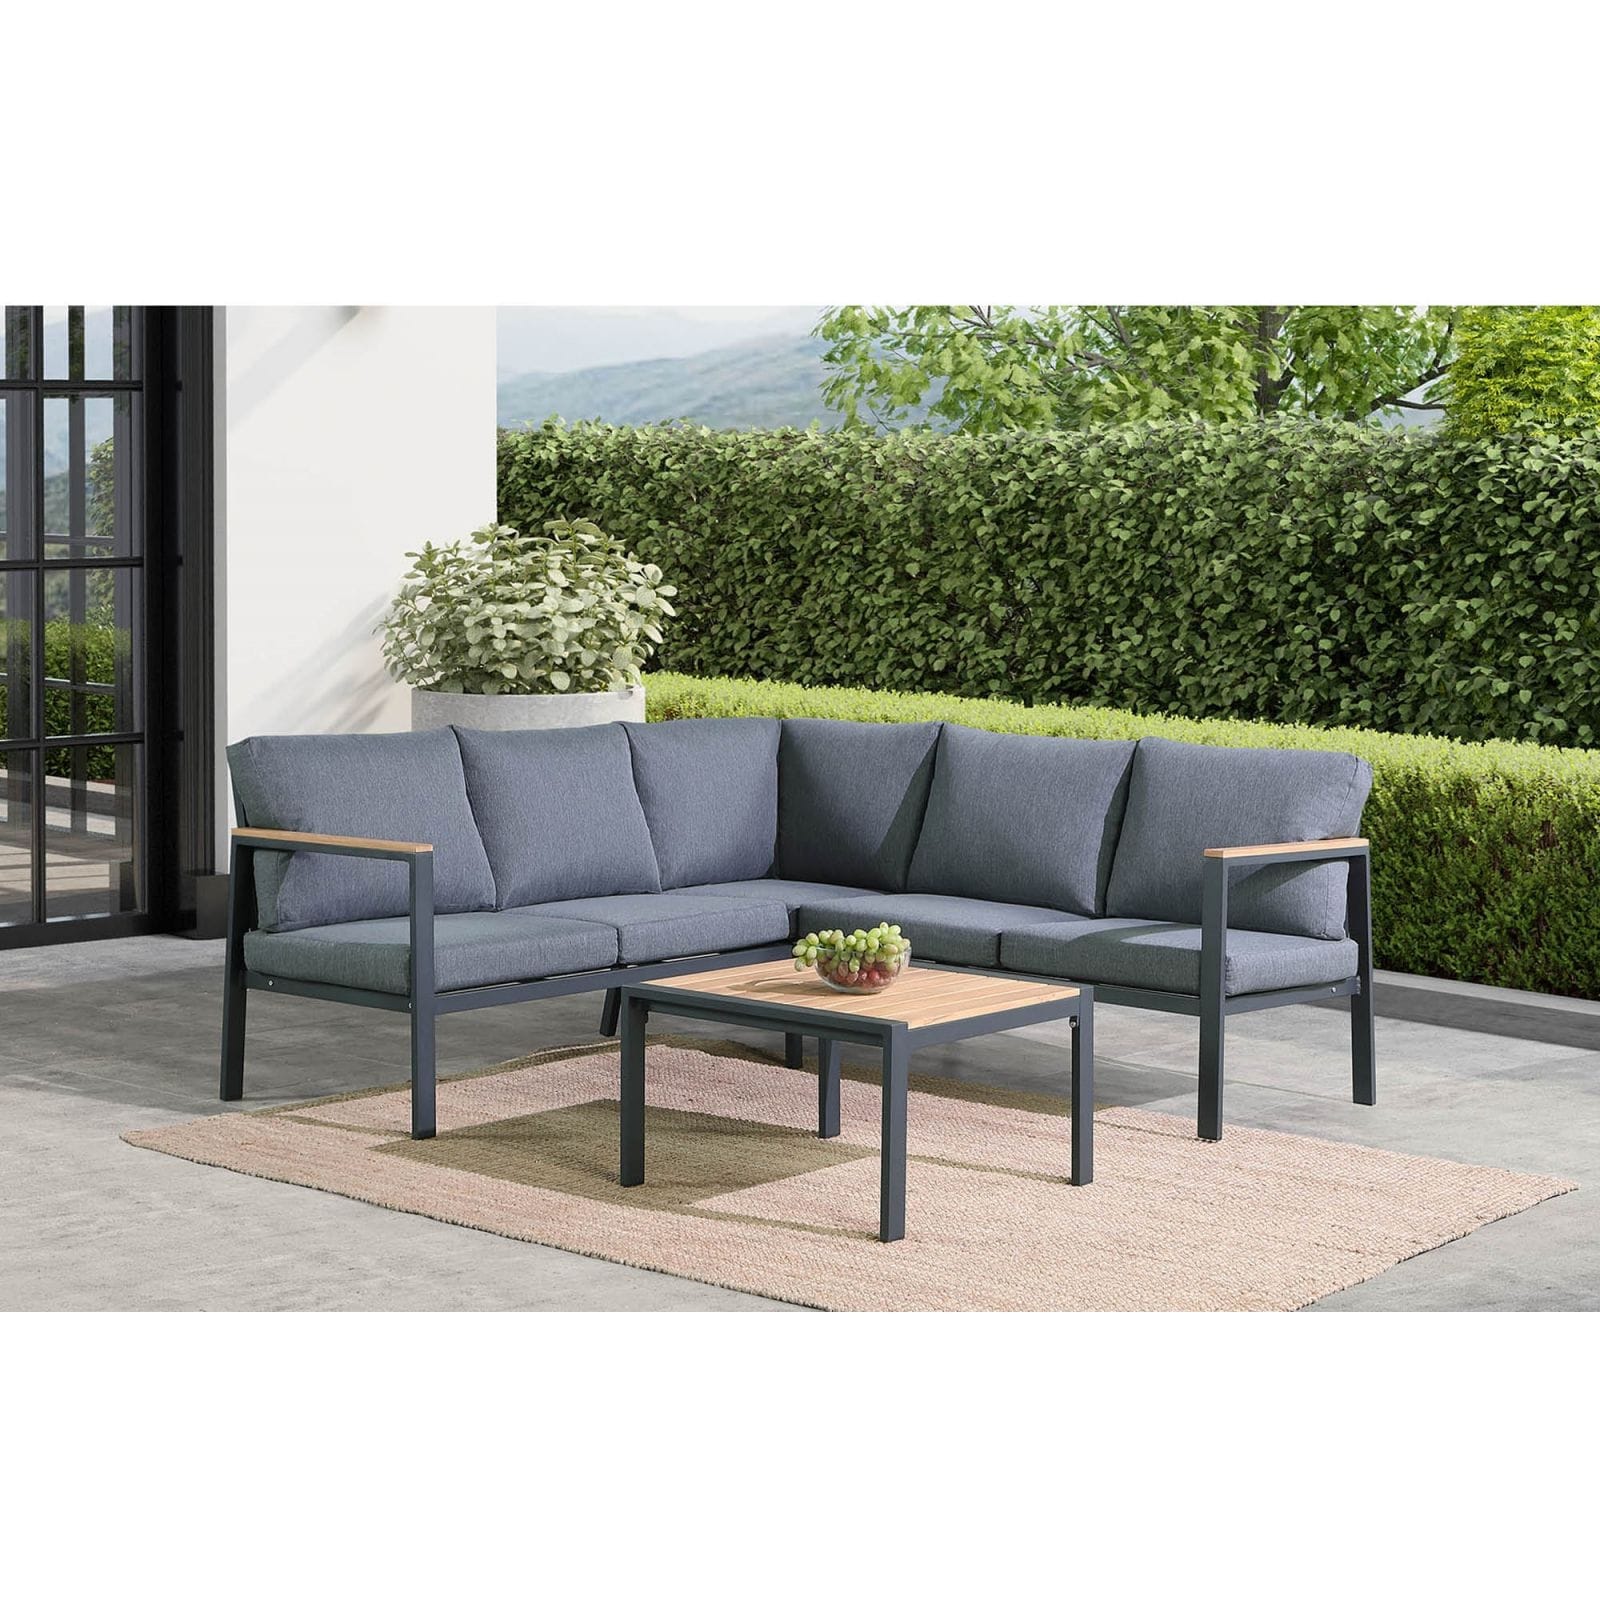 4-piece Outdoor Aluminum Teak Patio Sofa Set With Cushions grey